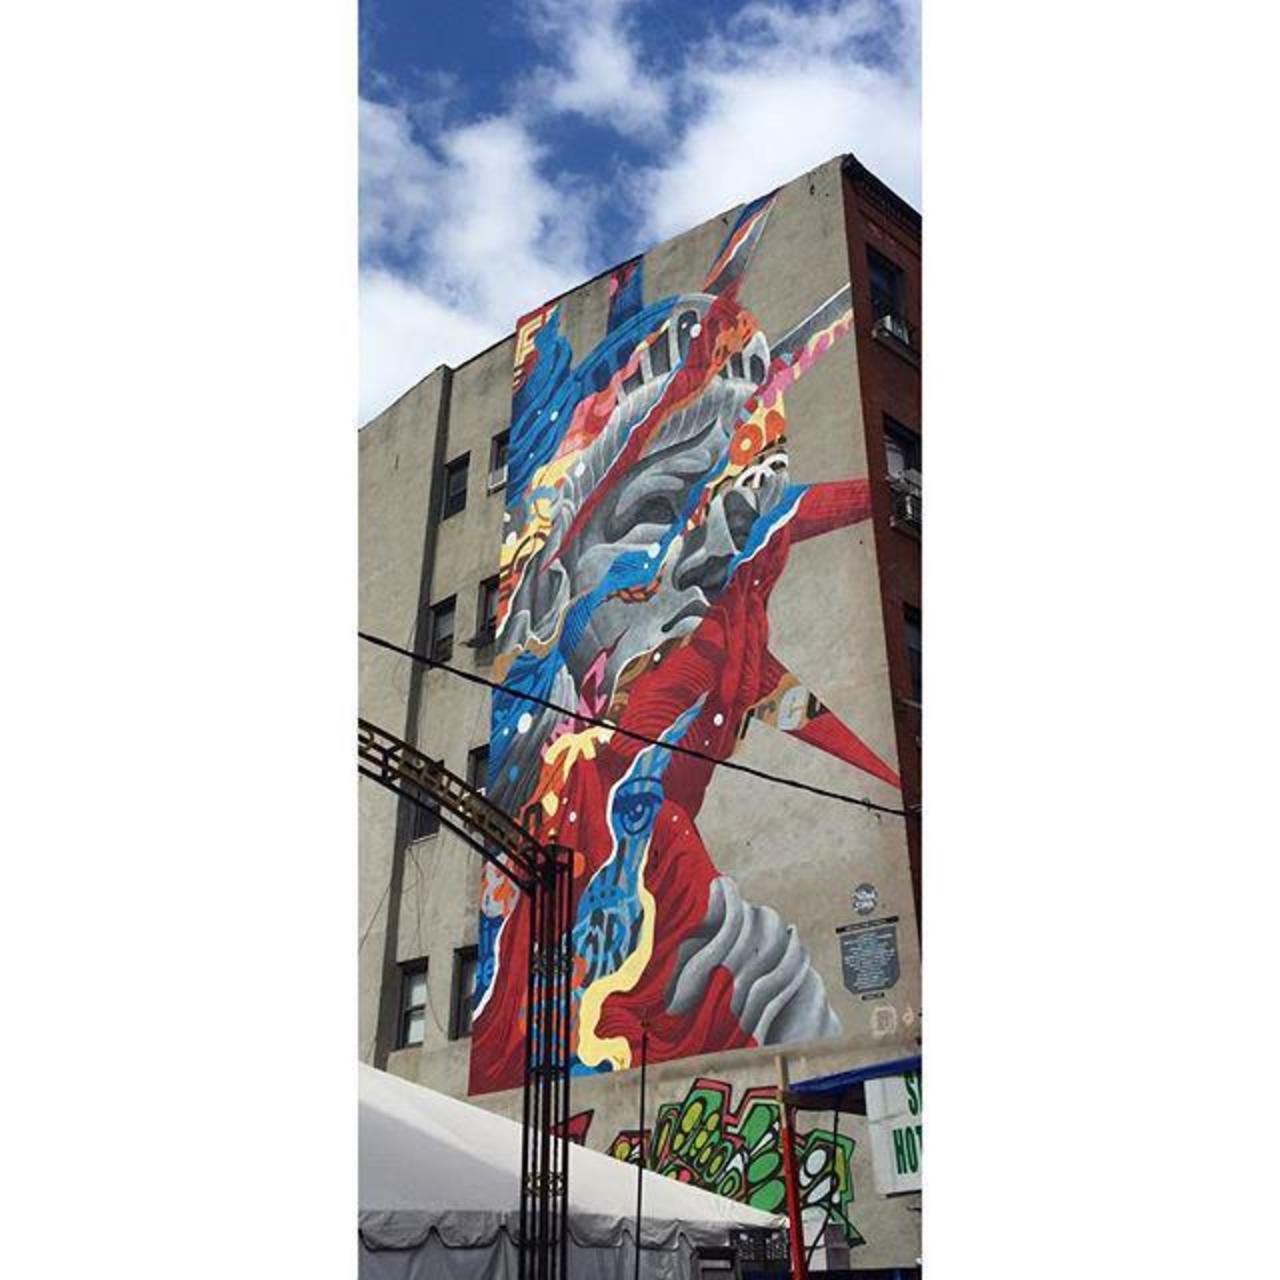 RT @StArtEverywhere: #colorful #mural #wall #streetartnyc #streetart #graffiti #statuteofliberty #chinatown #NYC #NewYorkCity #September… http://t.co/Tiokoh5Wz4